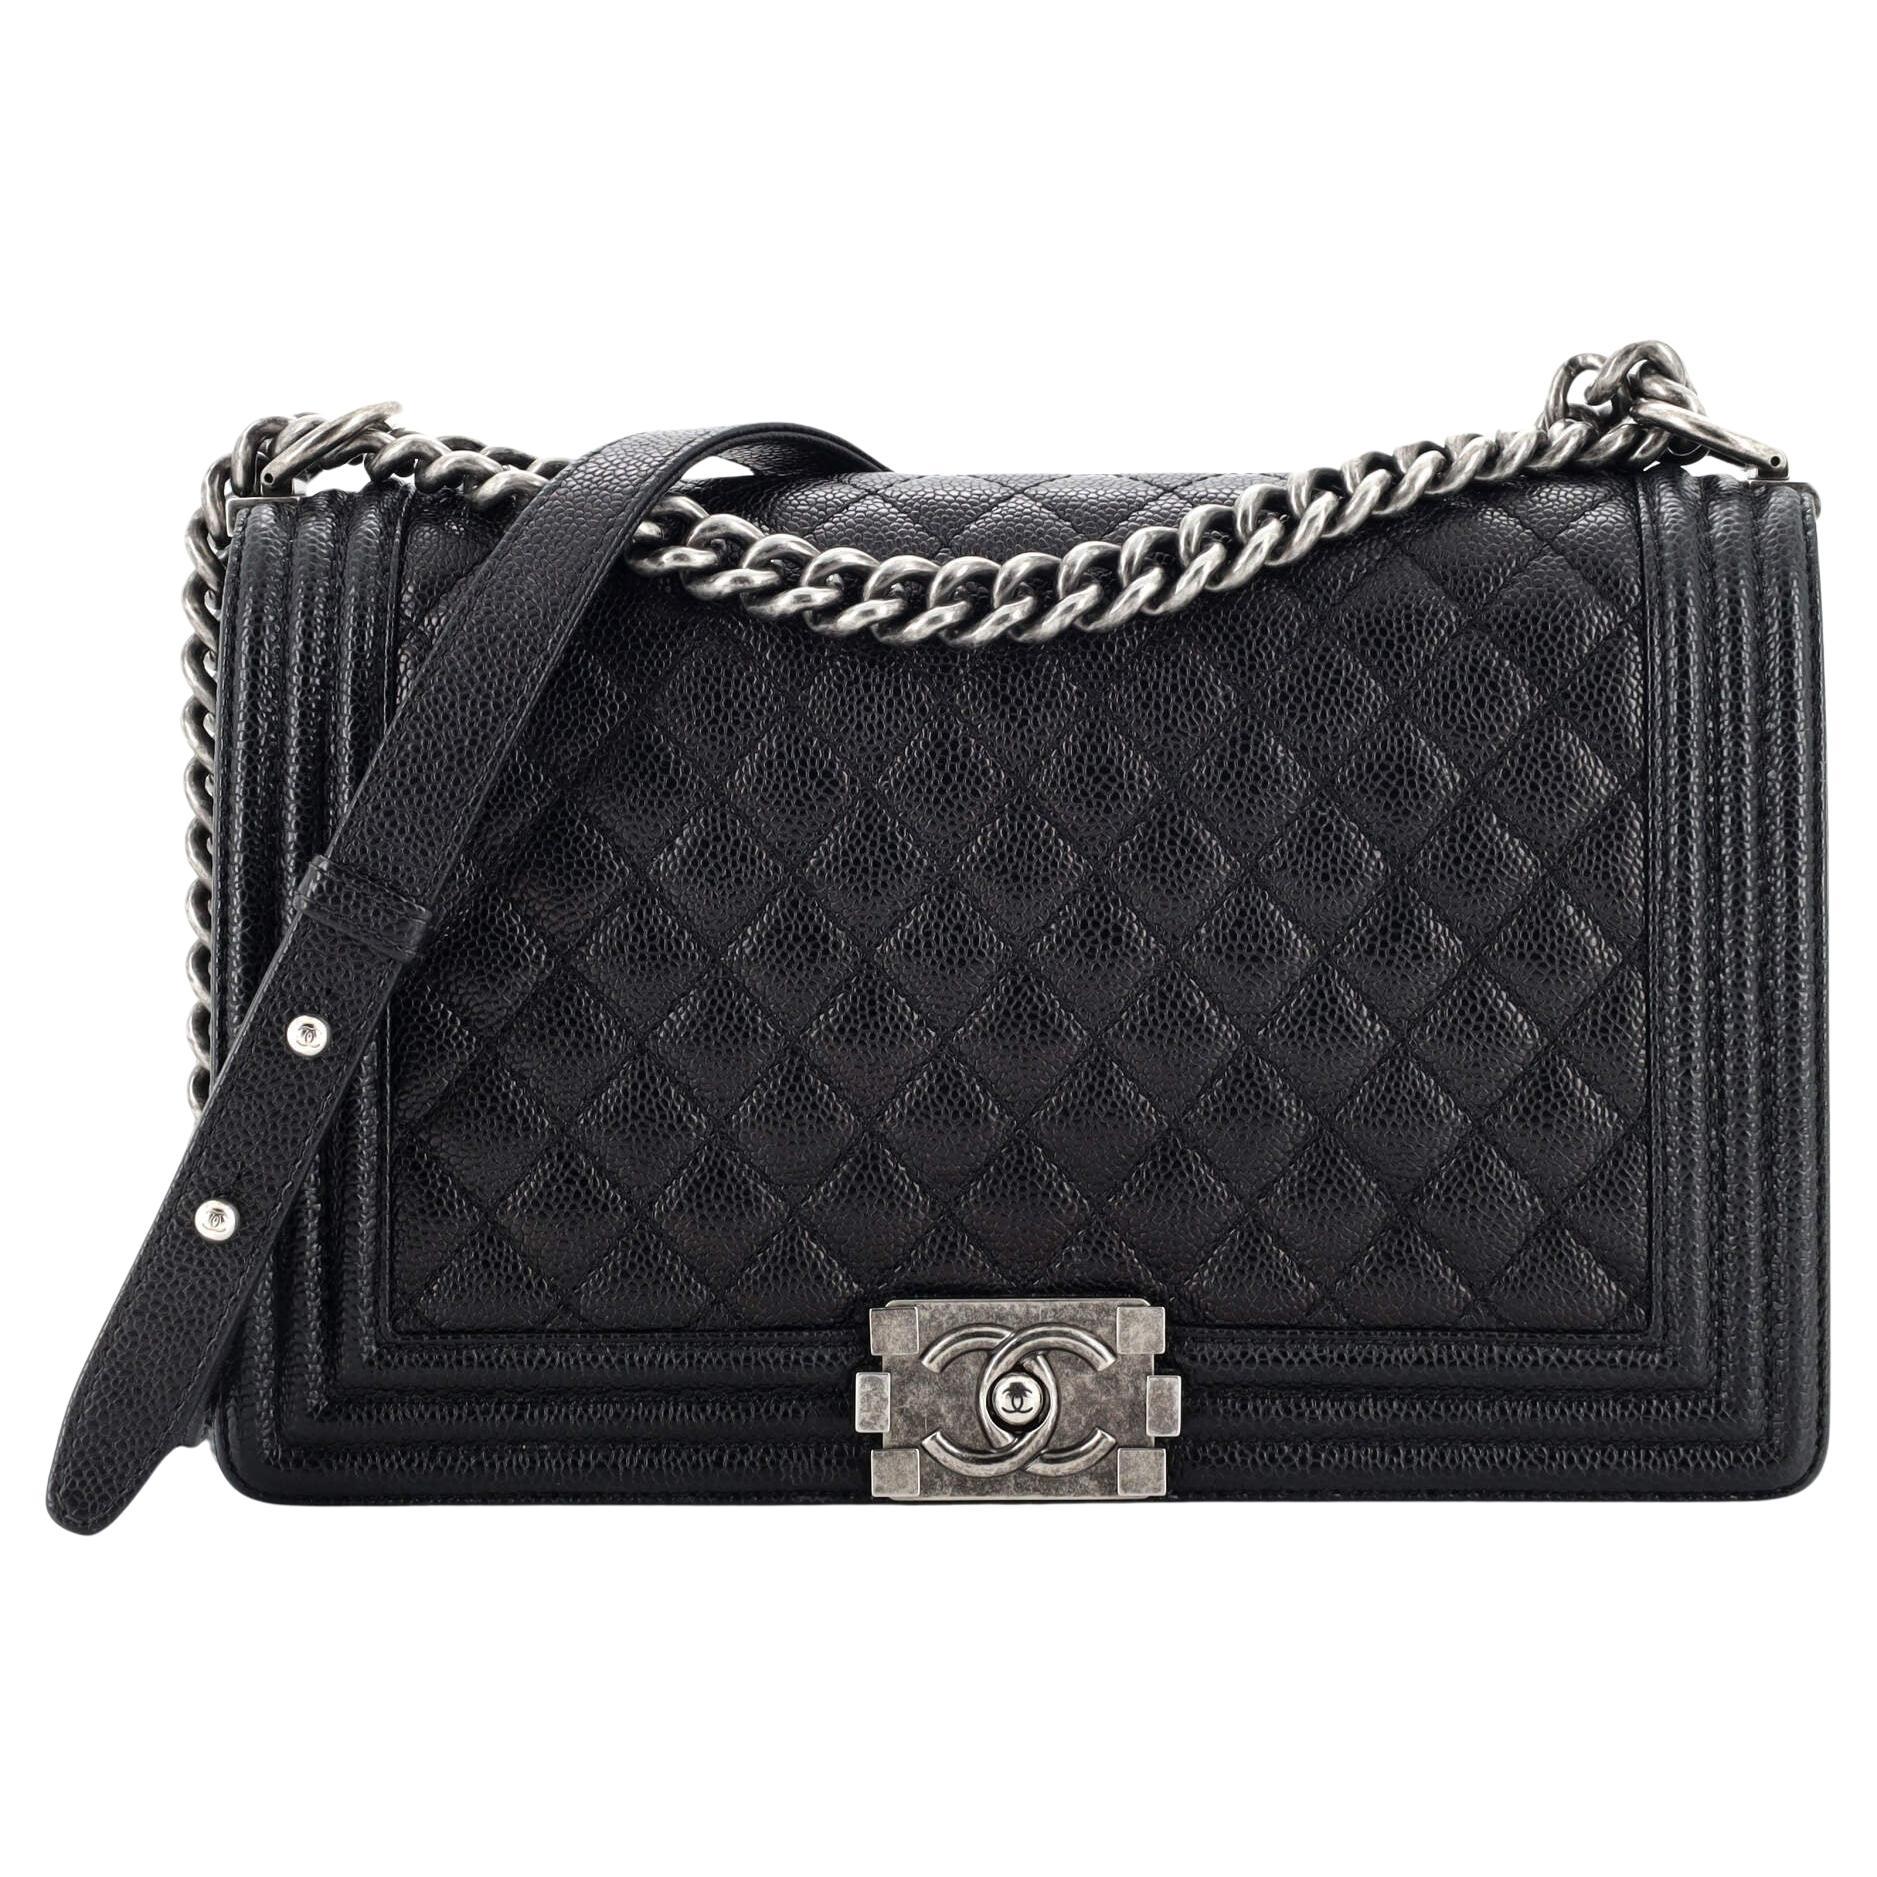 Chanel Black Patent Leather Bag - Shop on Pinterest